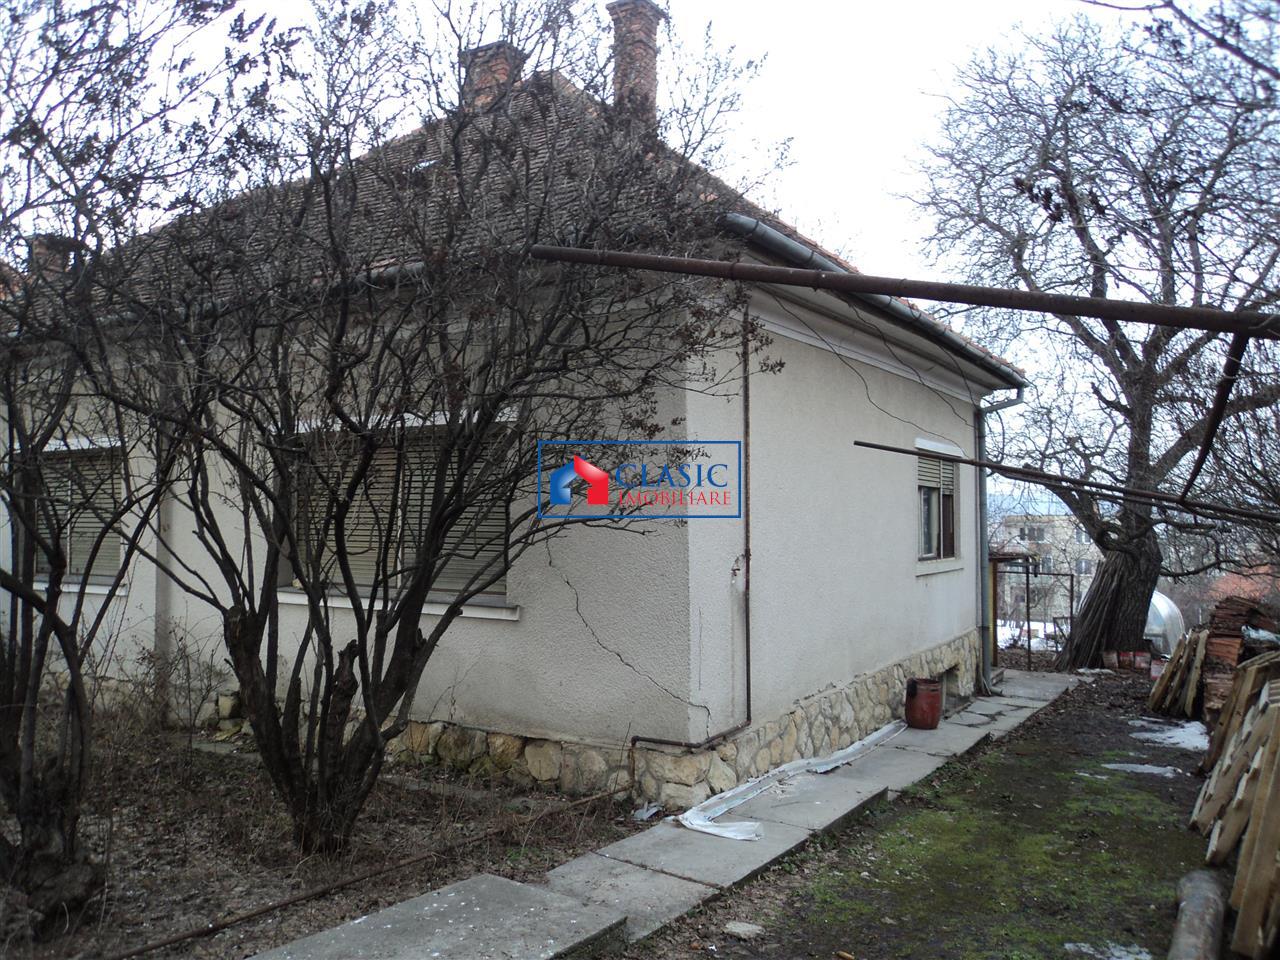 Vanzare casa demolabila A.Muresanu, Cluj Napoca